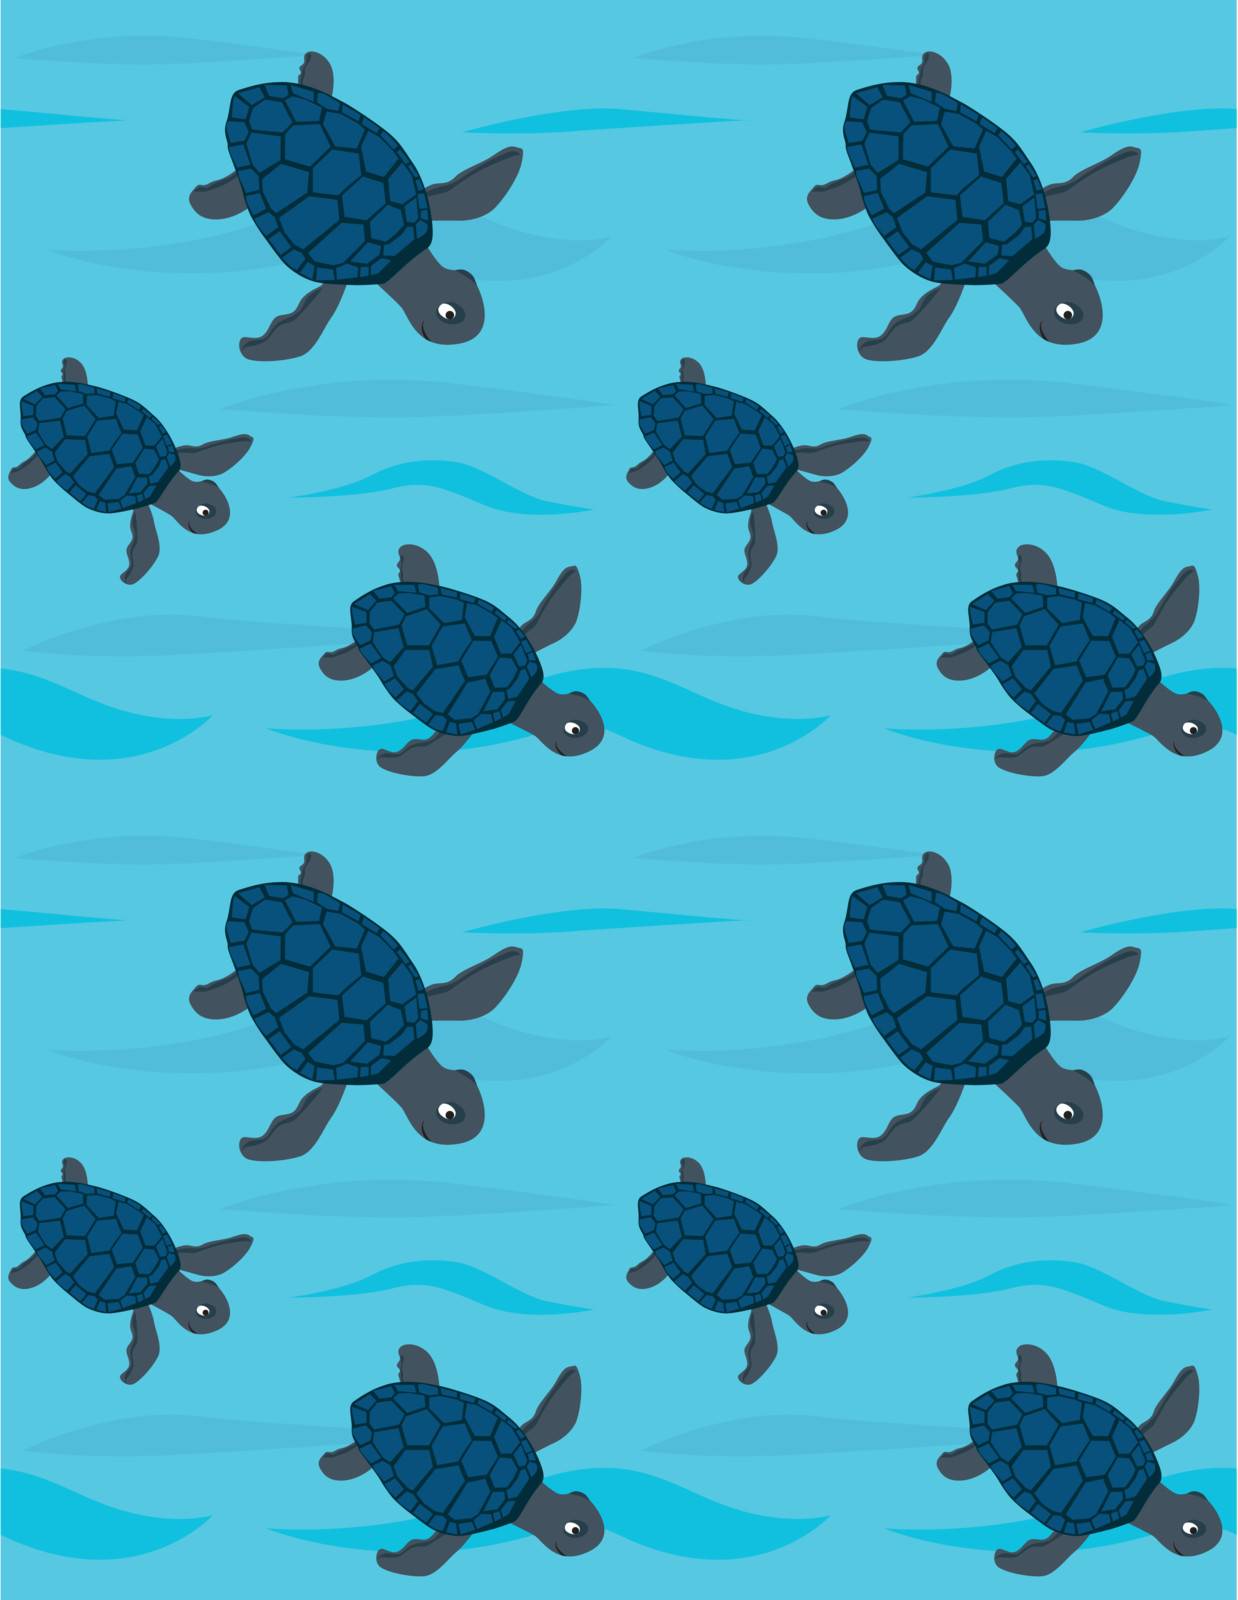 Seamless pattern made of blue sea turtles